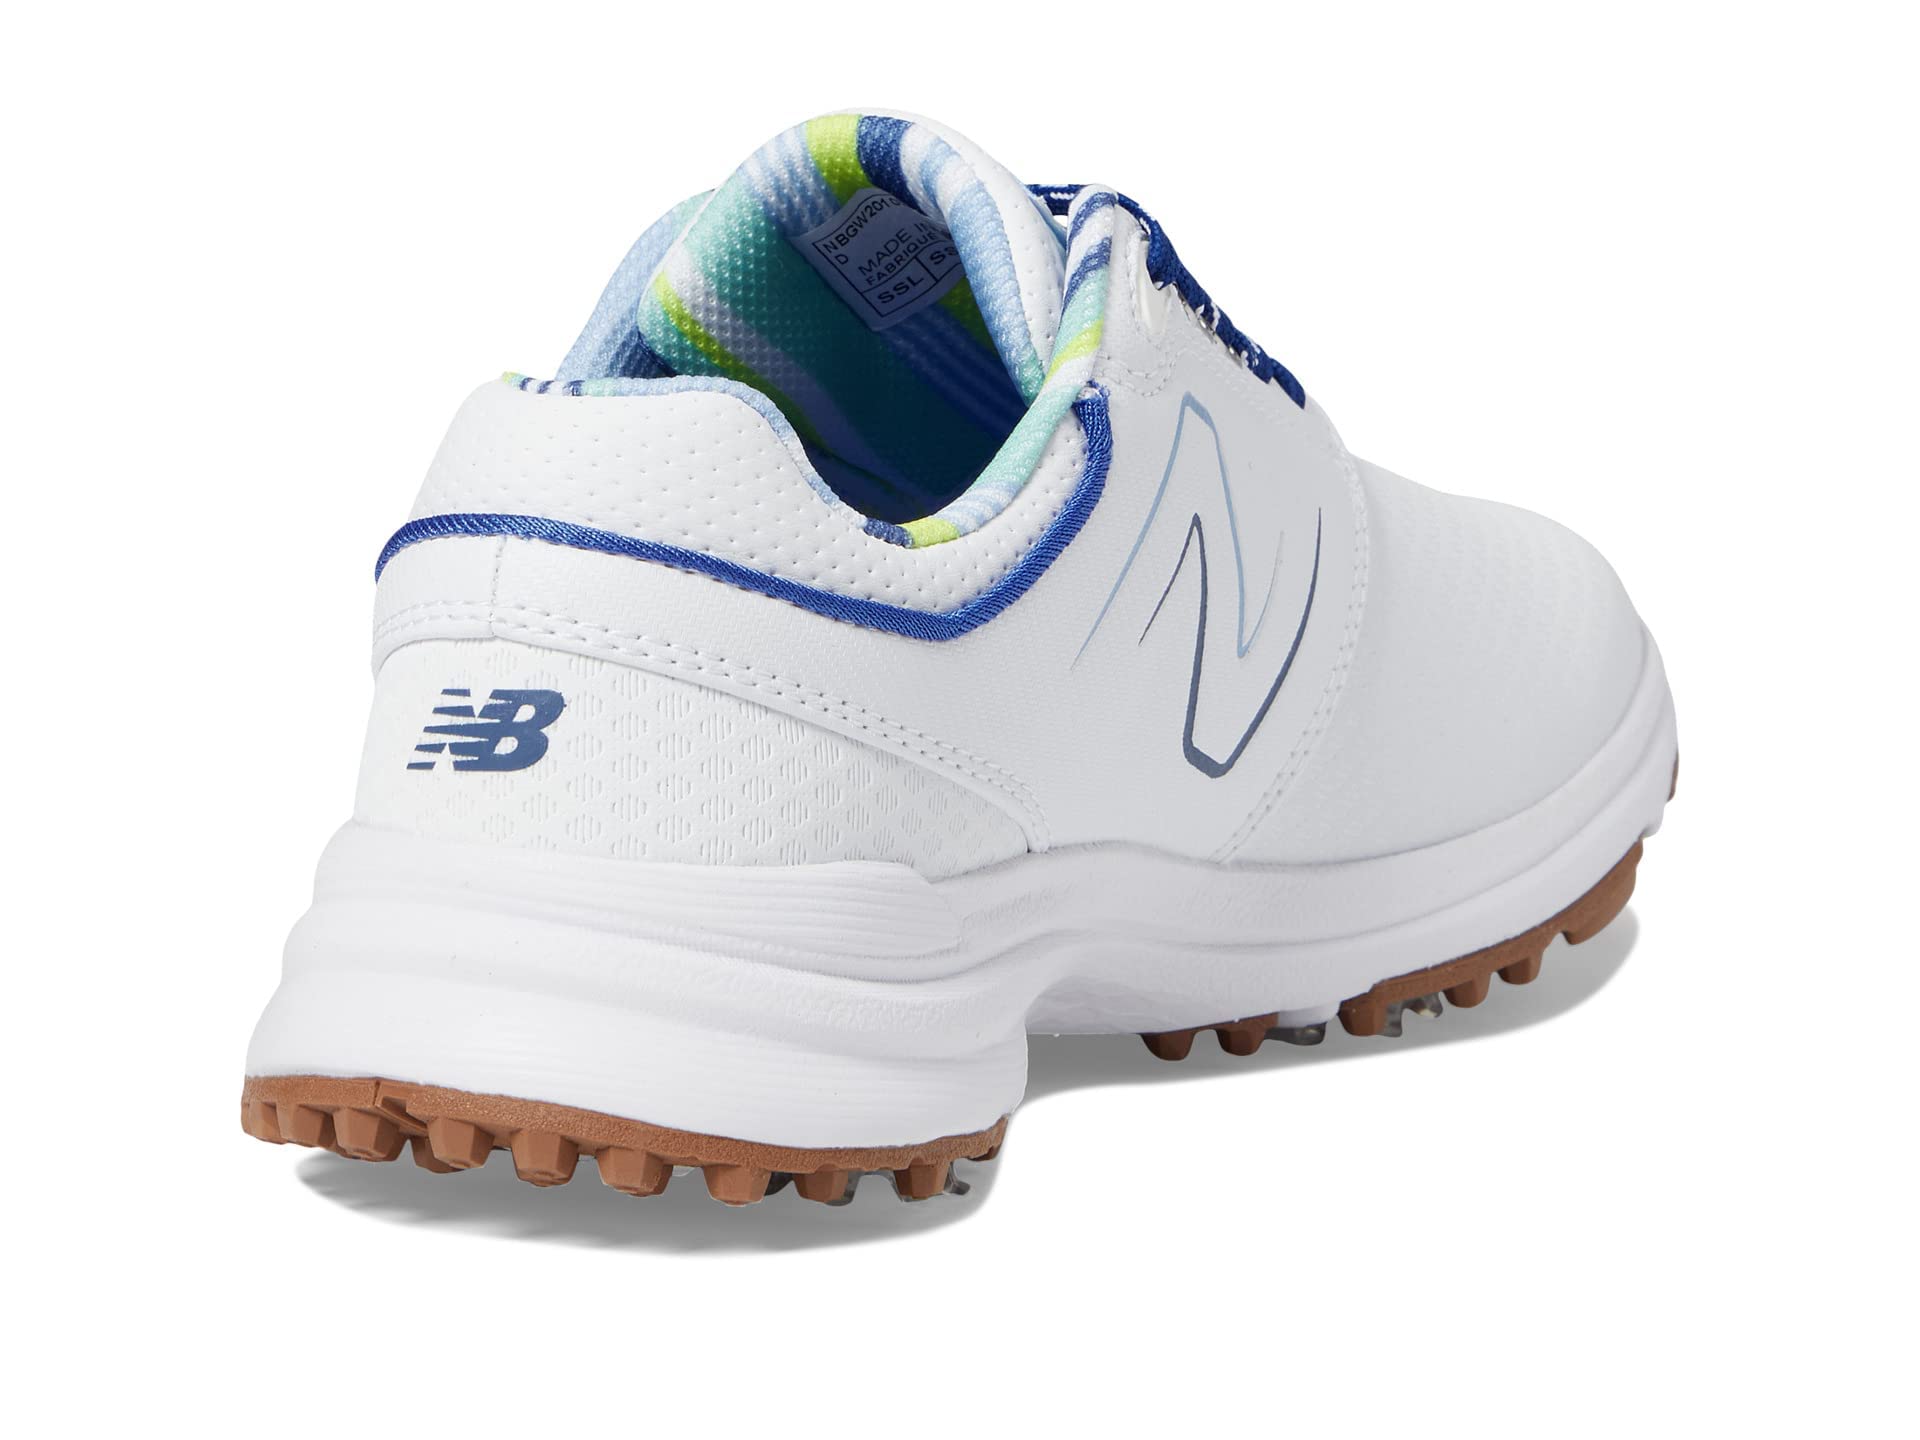 New Balance Women's Brighton Golf Shoes, White, 8.5